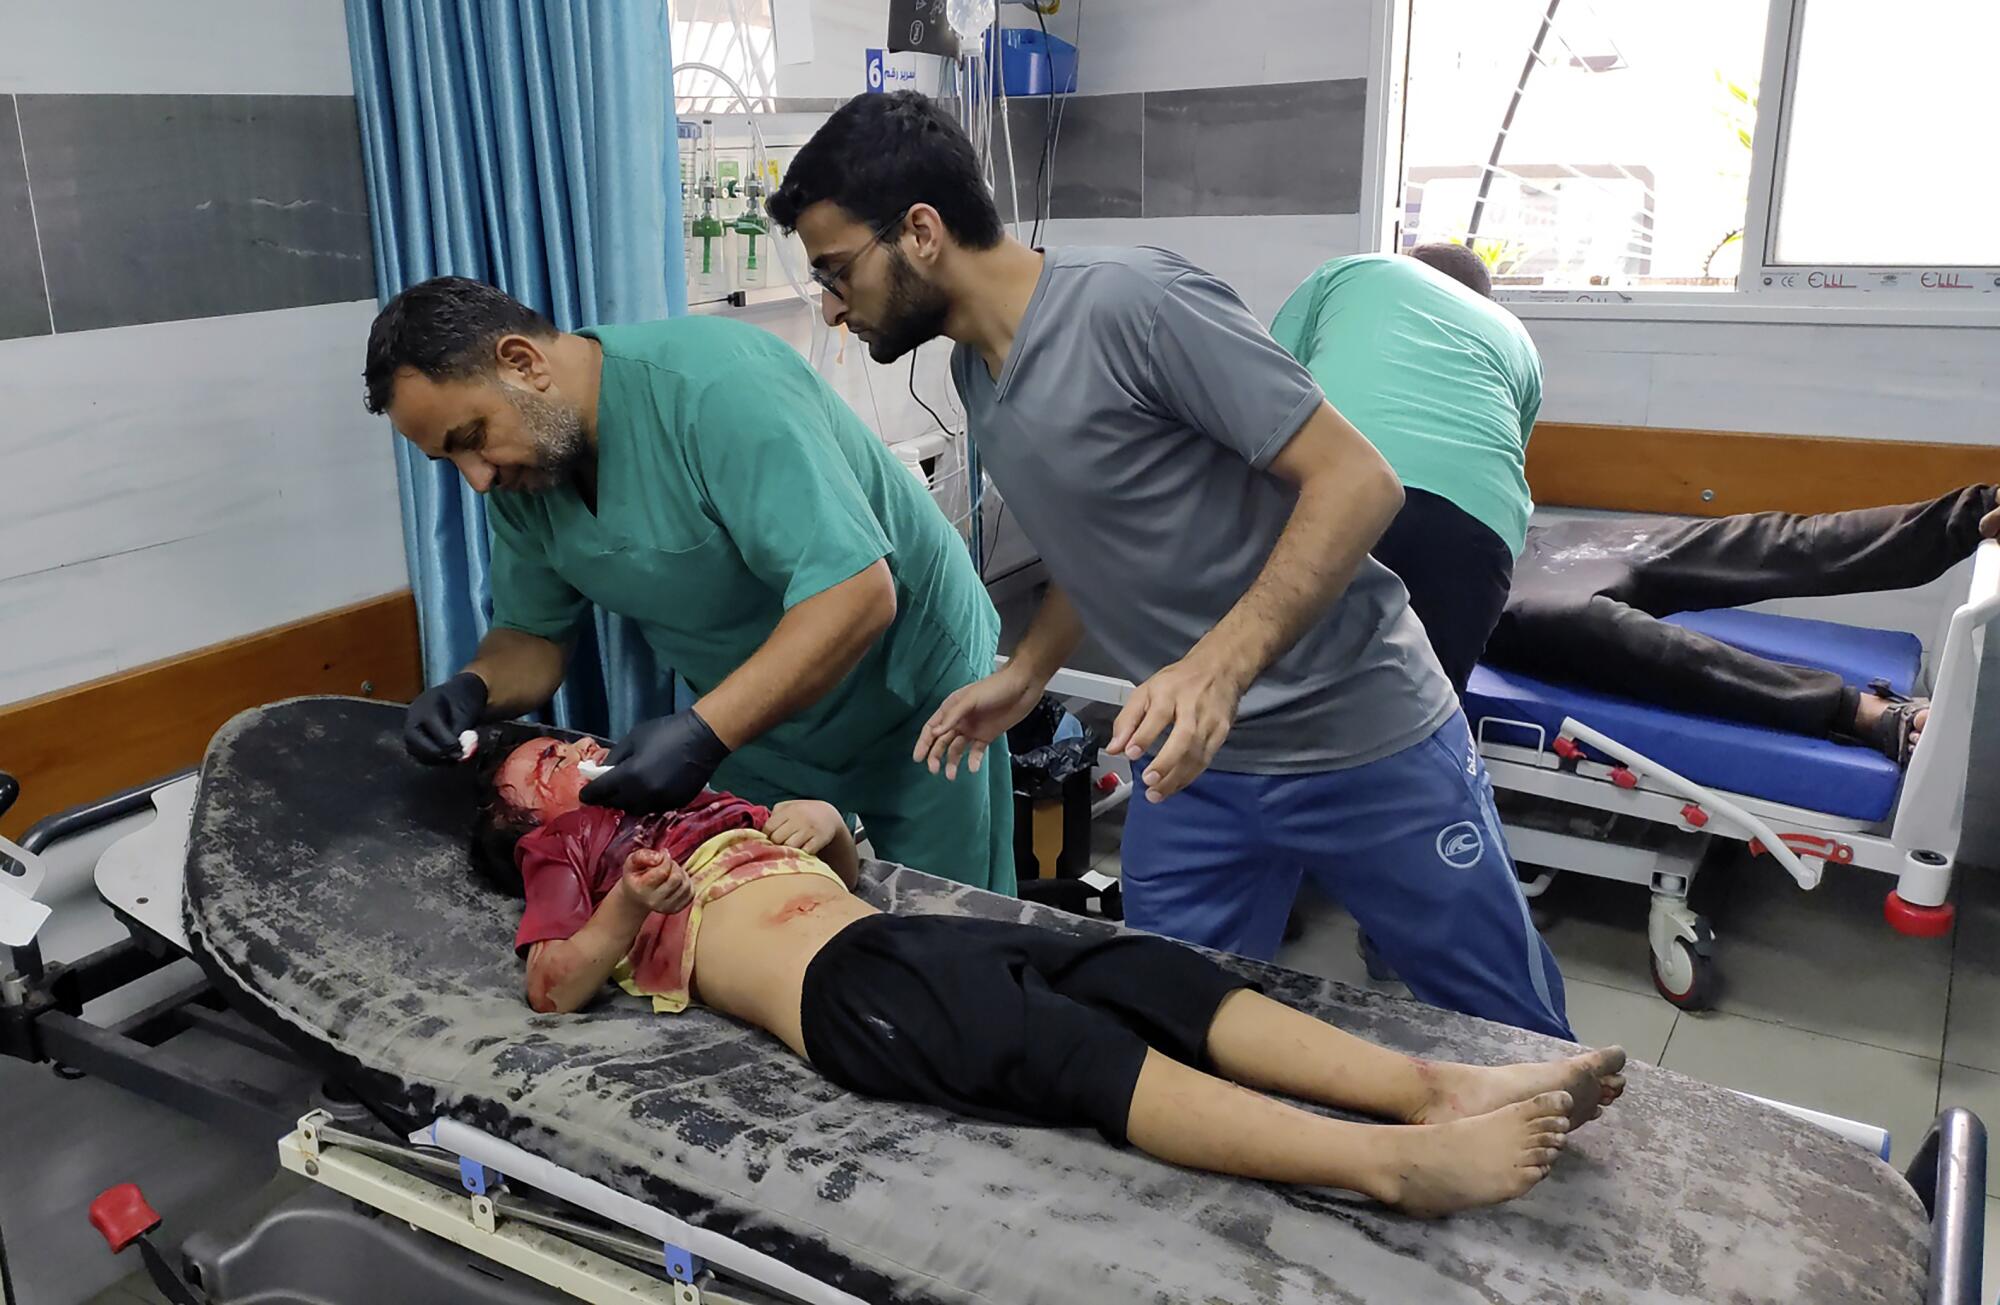 A bloody Palestinian child on a stretcher in Gaza.